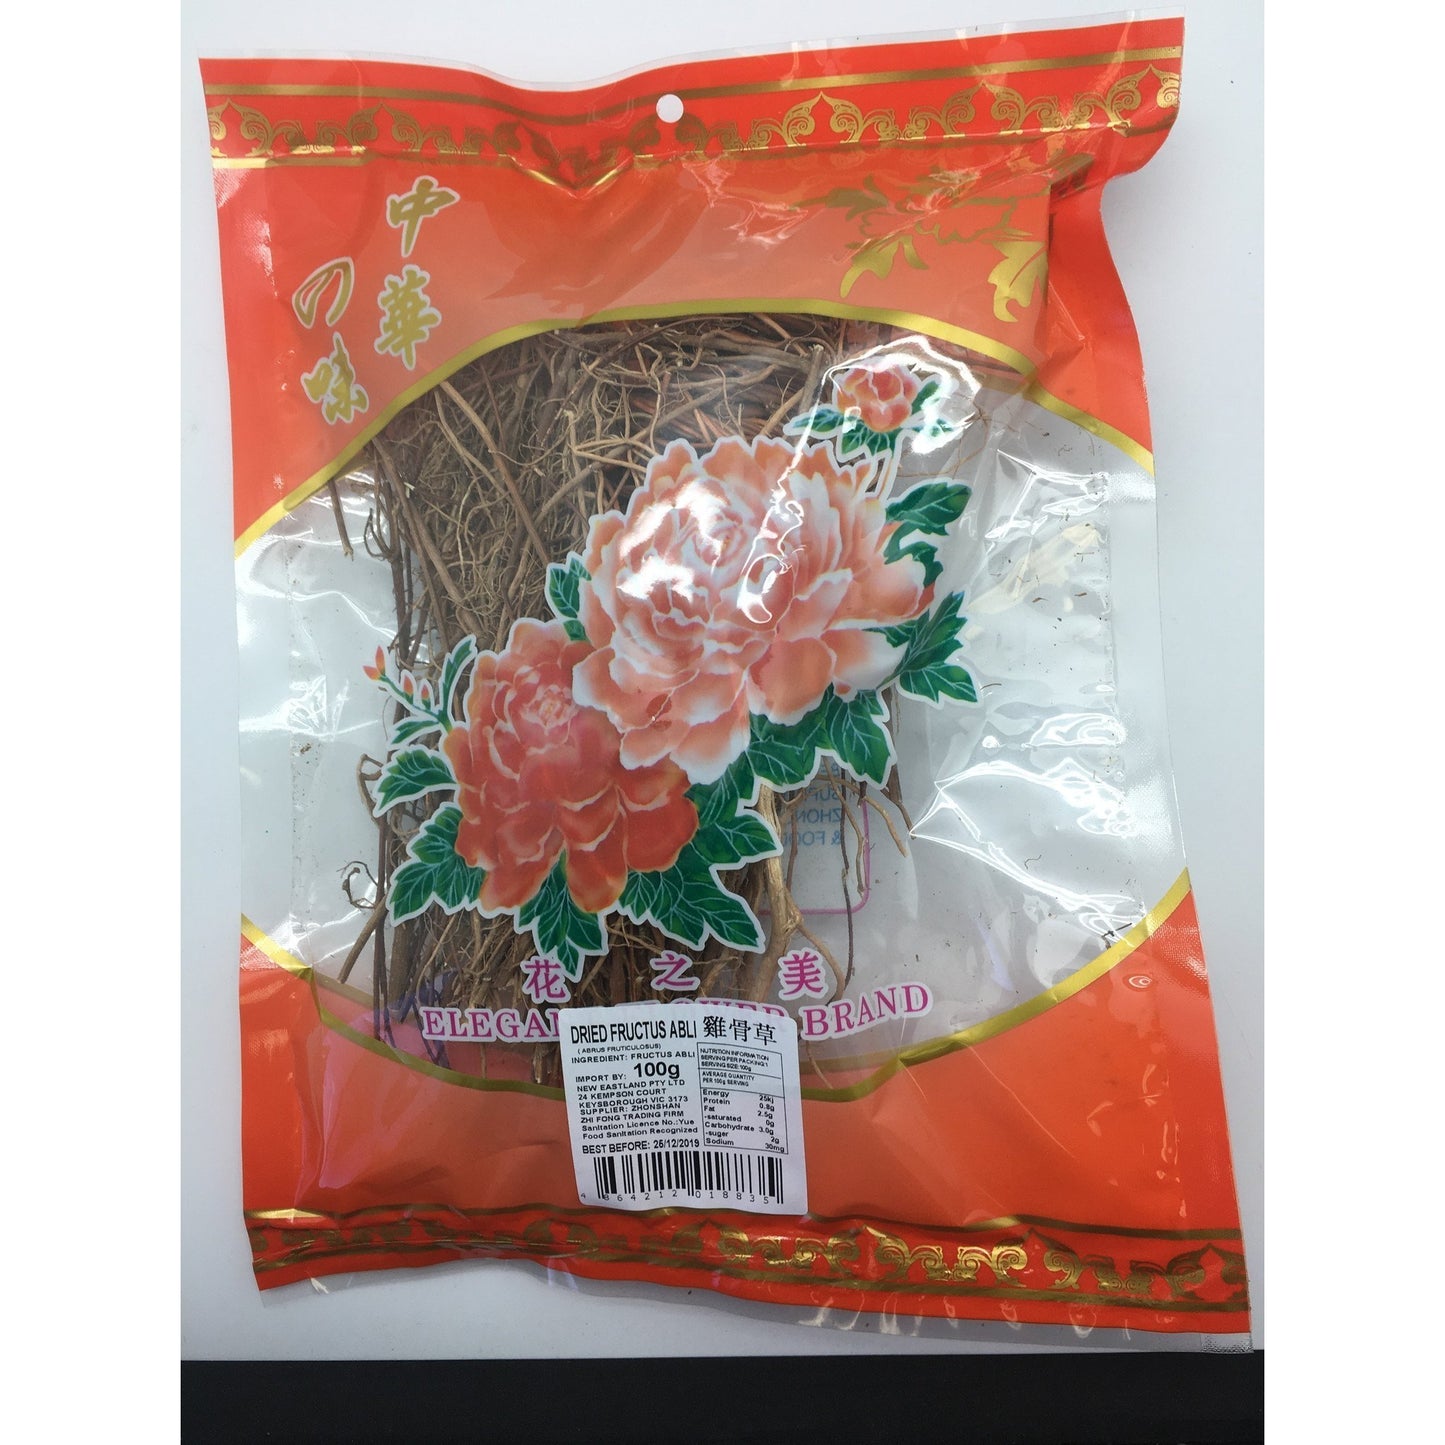 D049S Elegant Flower Brand - Dried Frustus Albi 100g - 100 bags / 1 CTN - New Eastland Pty Ltd - Asian food wholesalers